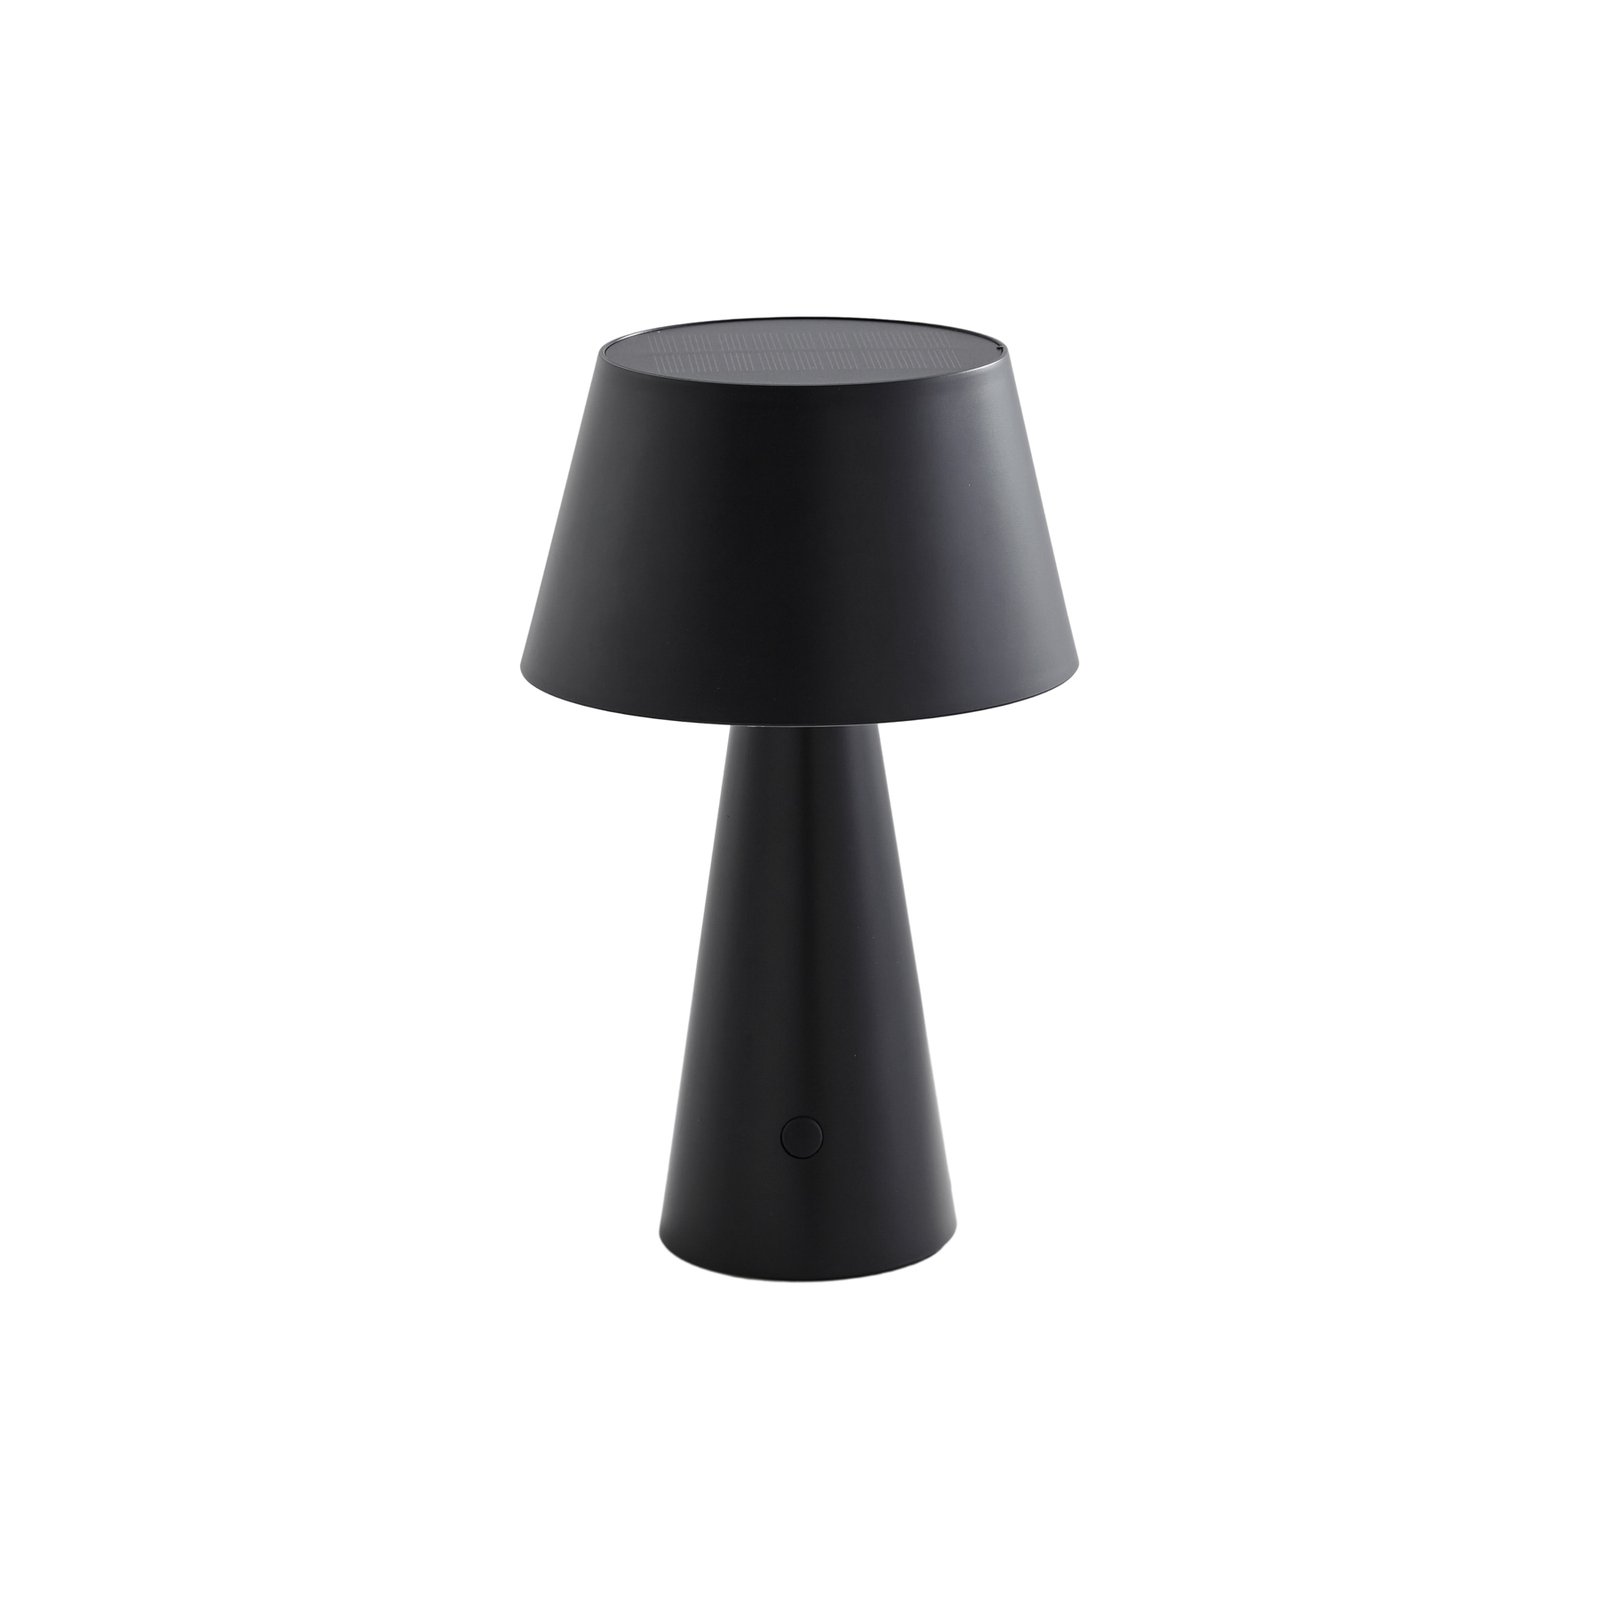 Lindby Lirinor LED table lamp, black, 4,000K